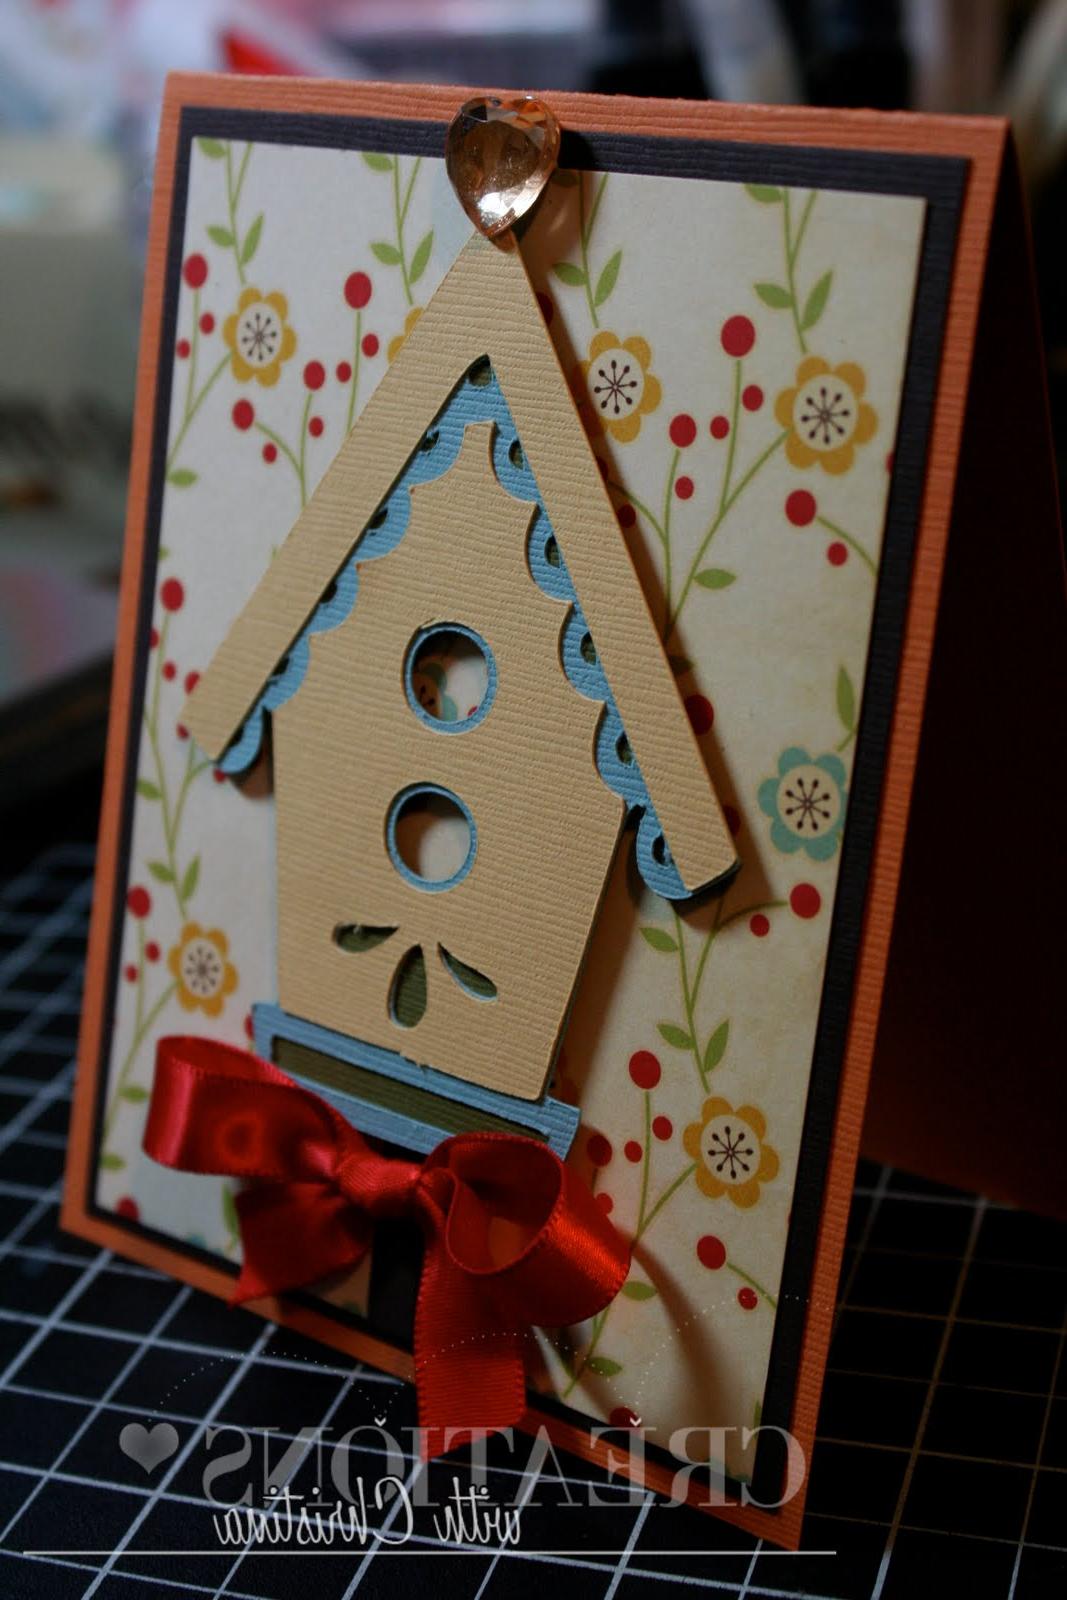 birdhouse shaped card too.